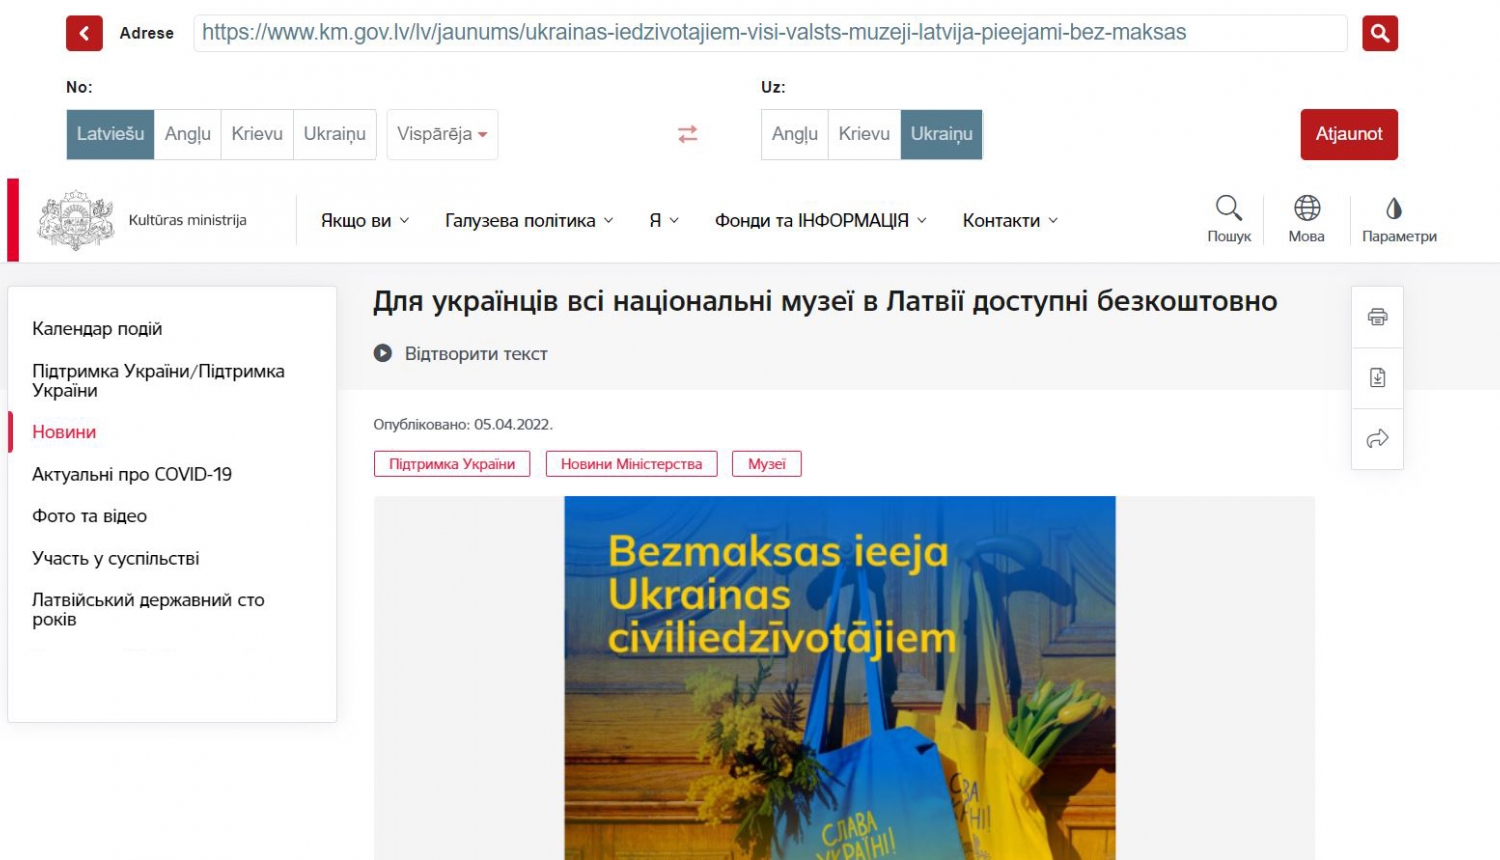 The translation platform www.Hugo.lv offers automatic translation of Ukrainian-Latvian language